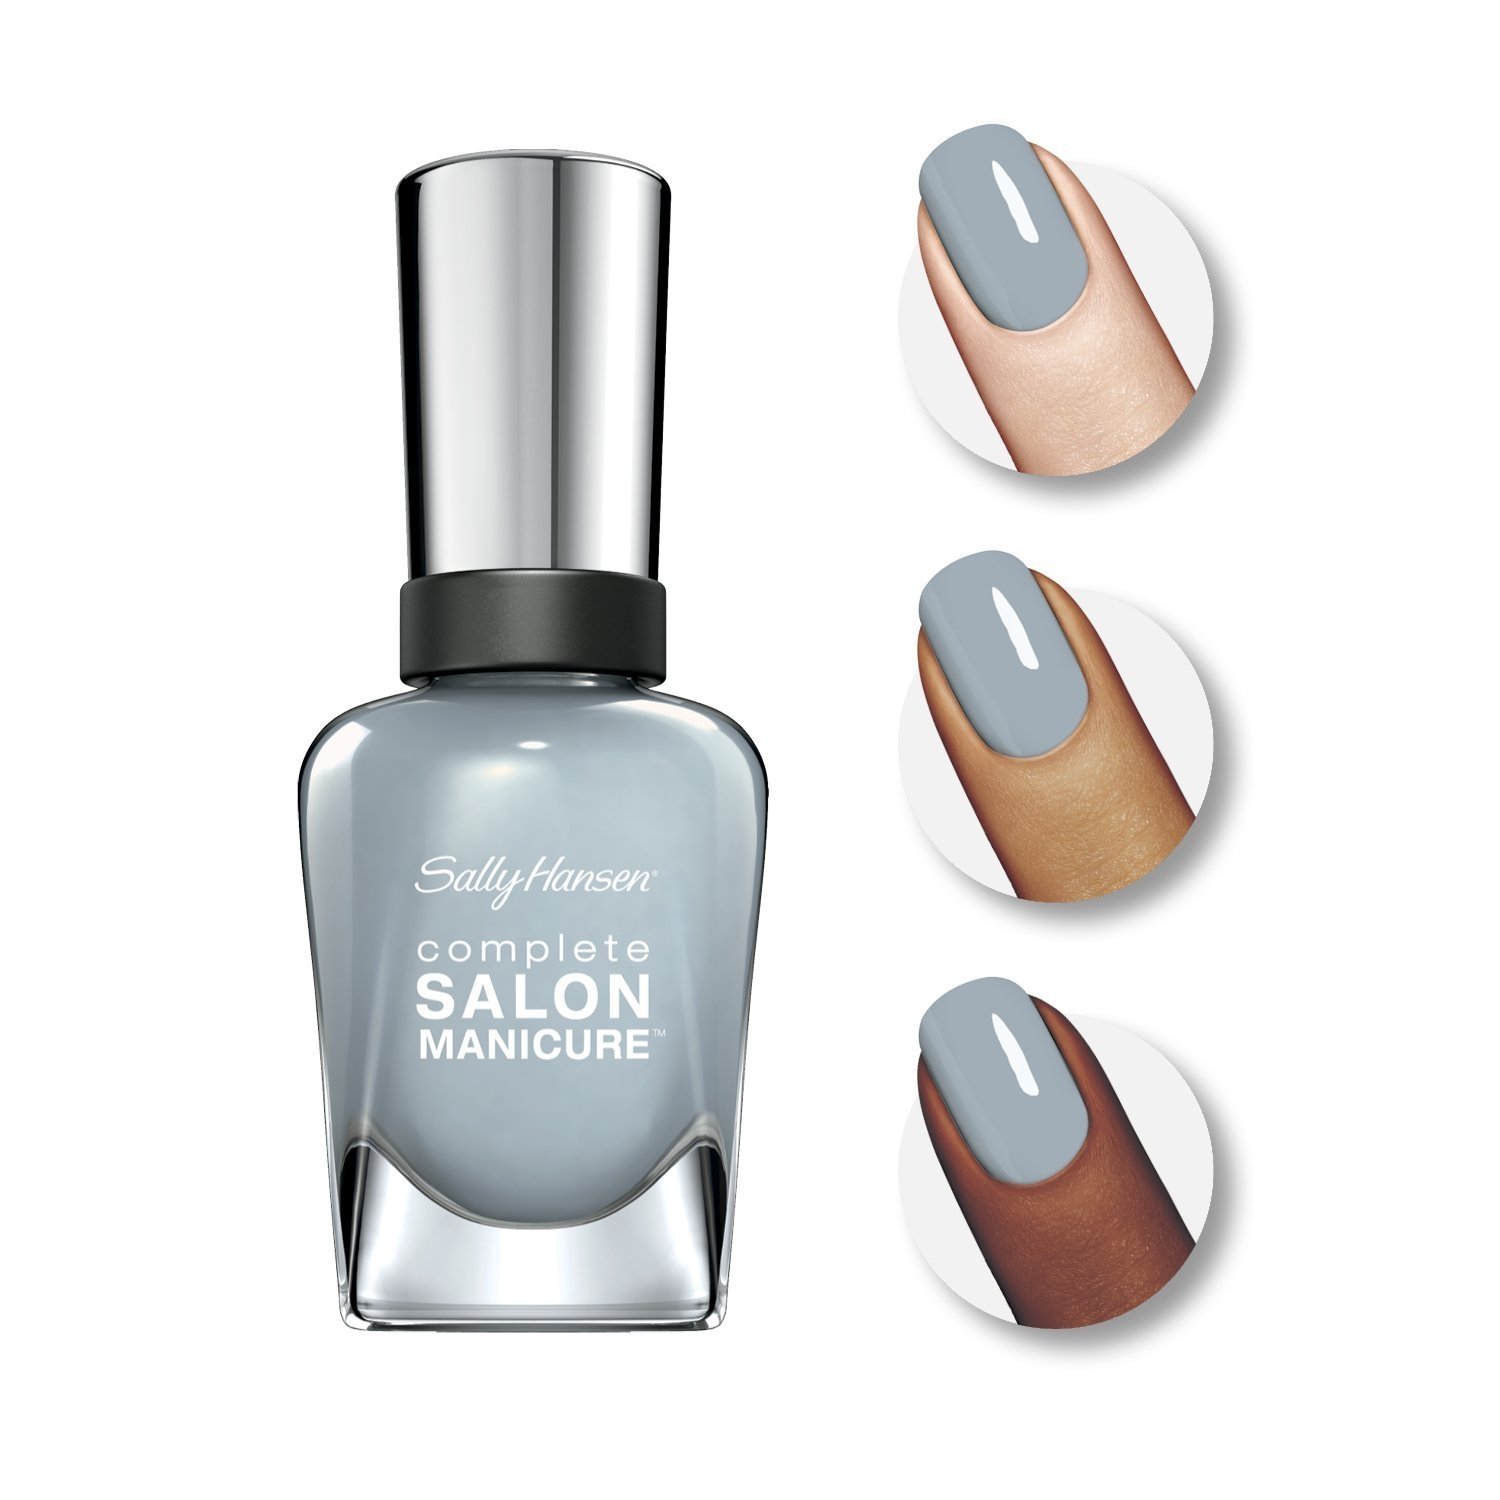 Sally Hansen- Complete Salon Manicure In Full Blue-m 0.5 fl oz - image 3 of 4